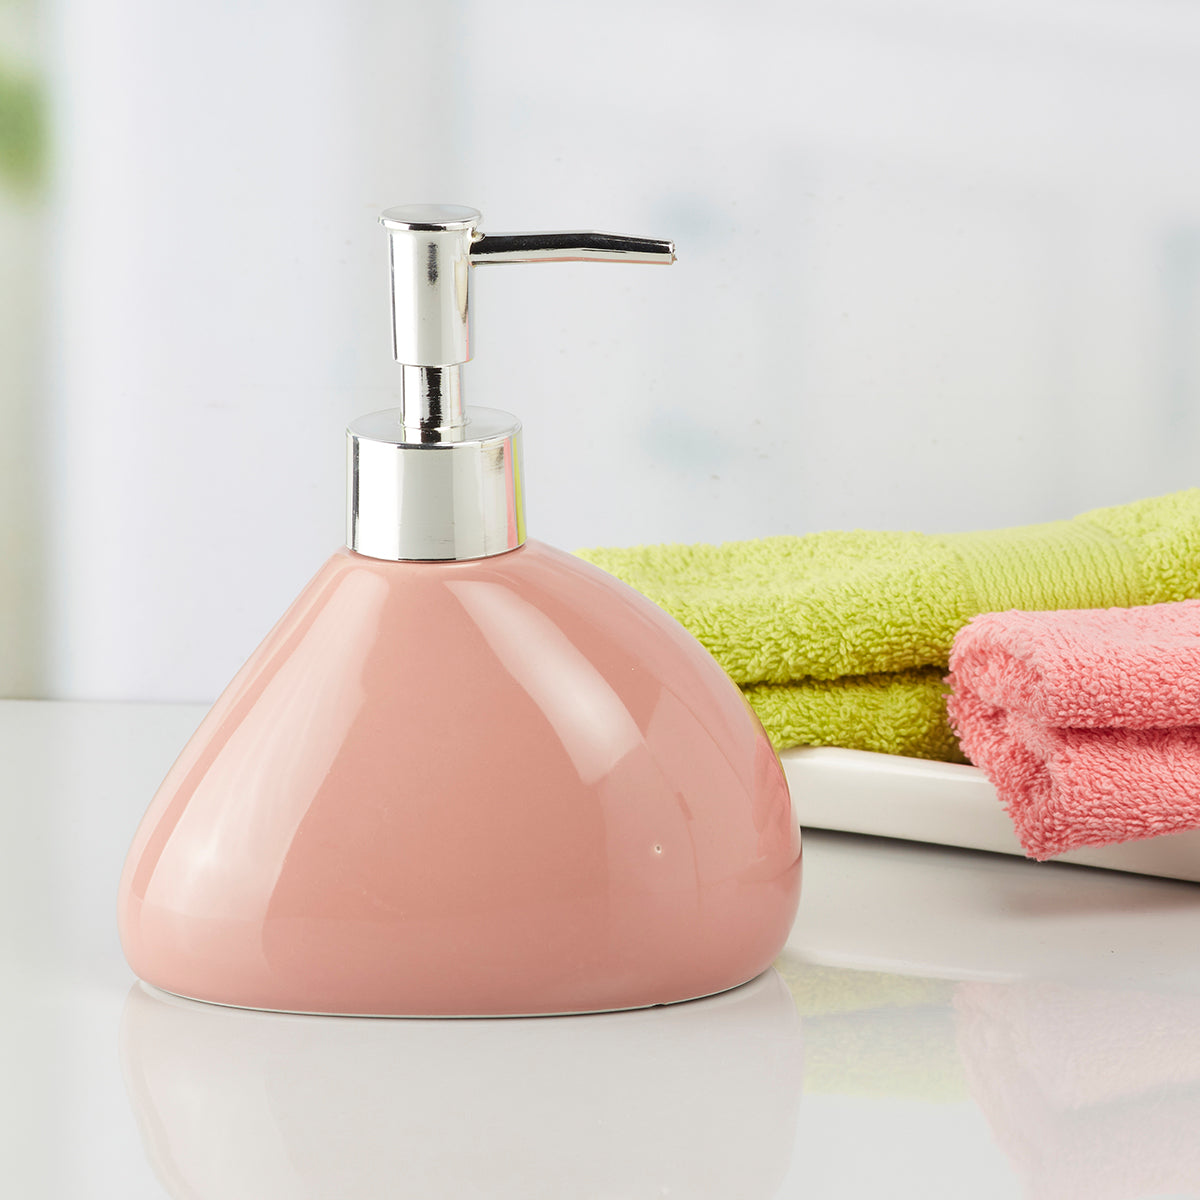 Ceramic Soap Dispenser handwash Pump for Bathroom, Set of 1, White (7971)